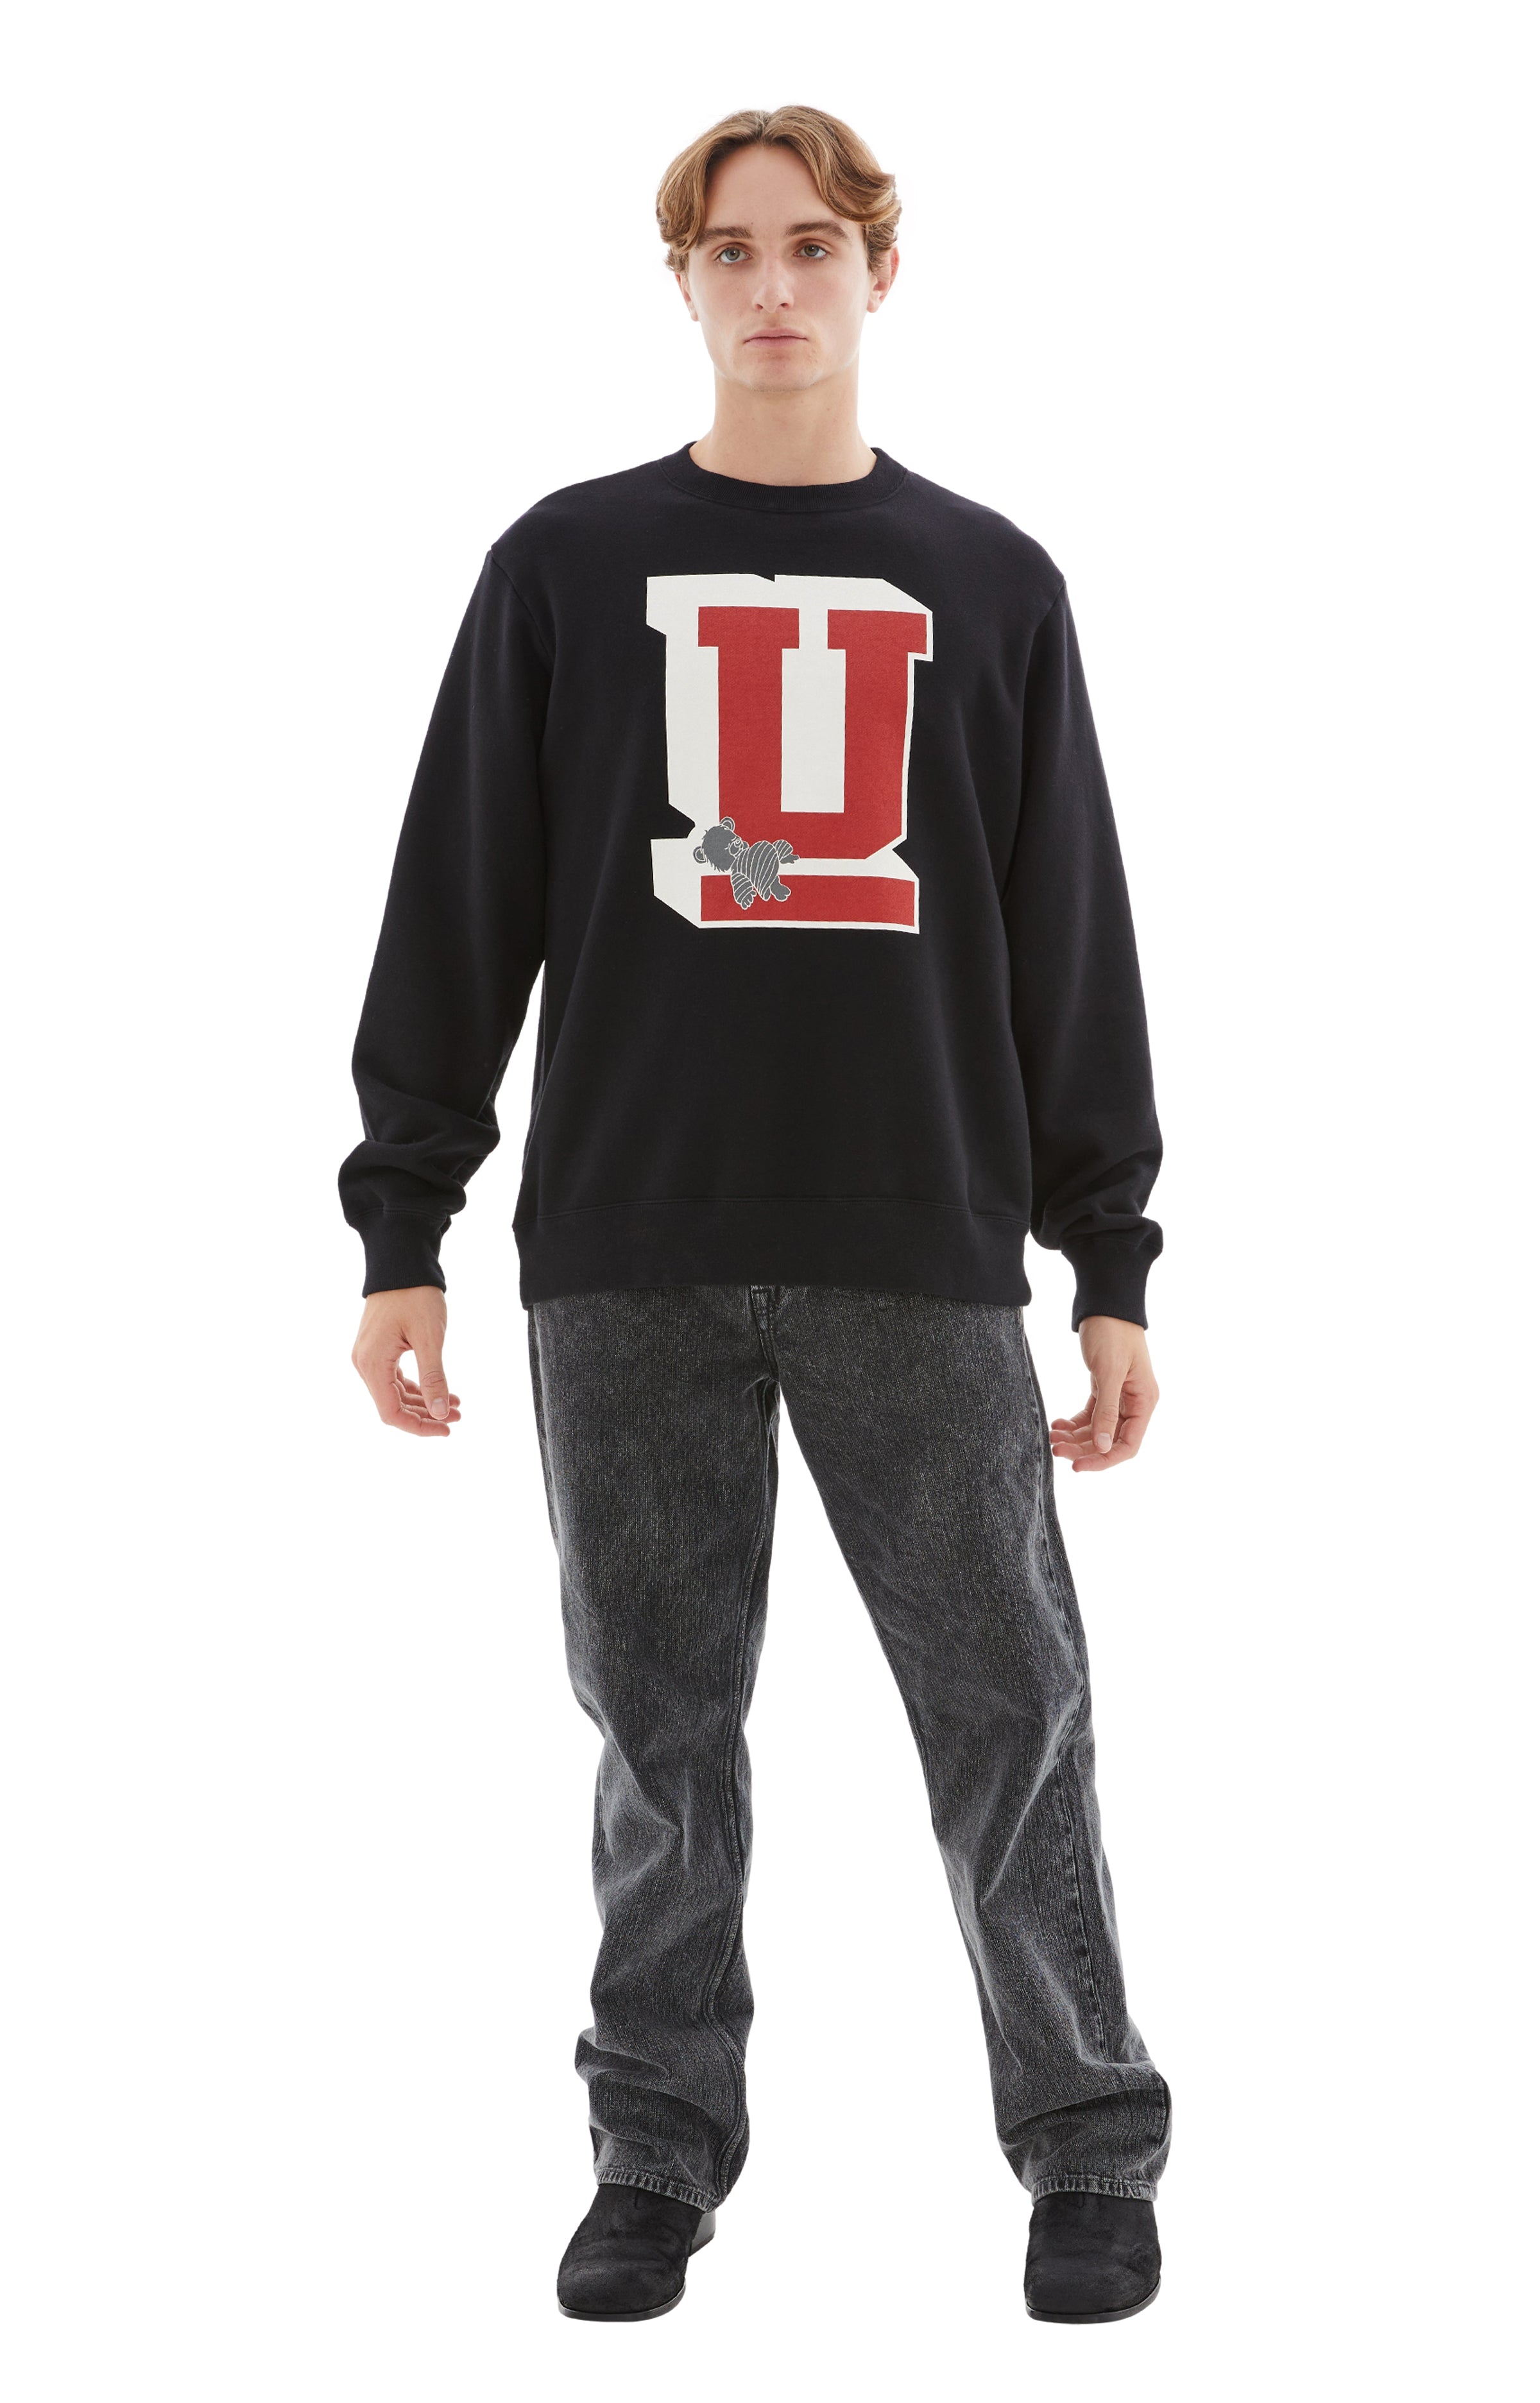 'U' College Sweatshirt (Black)